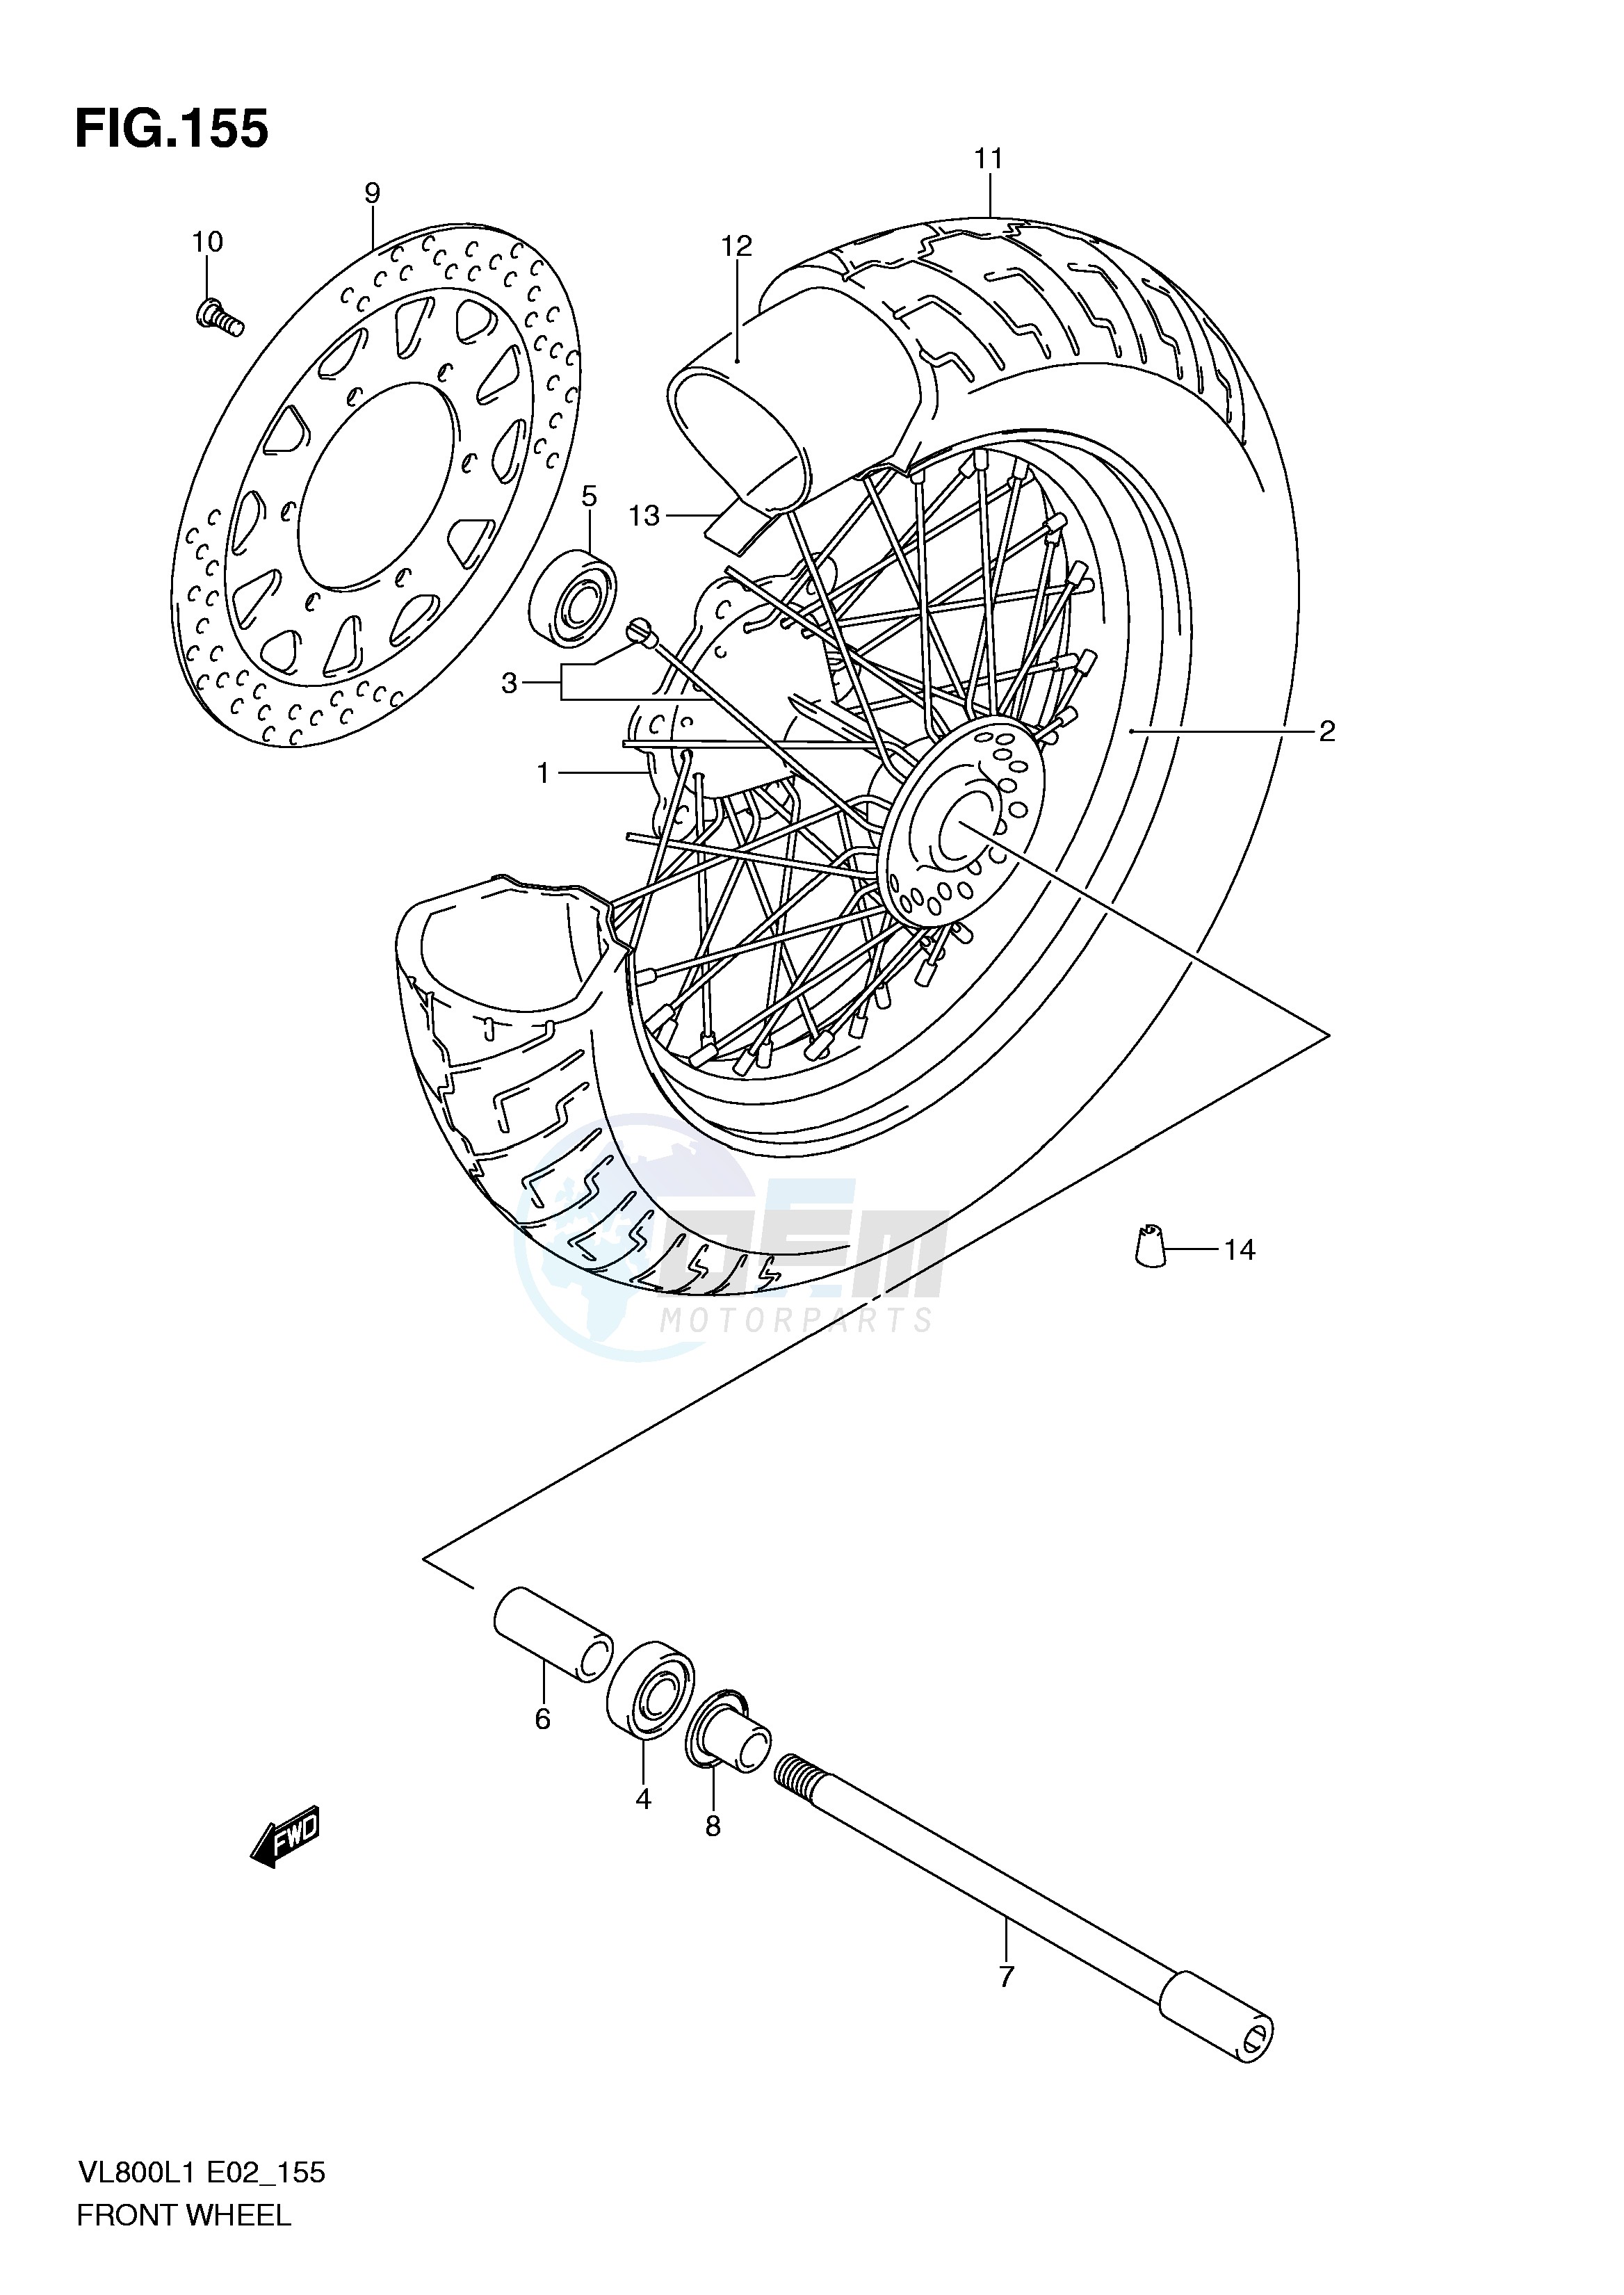 FRONT WHEEL (VL800UEL1 E19) blueprint